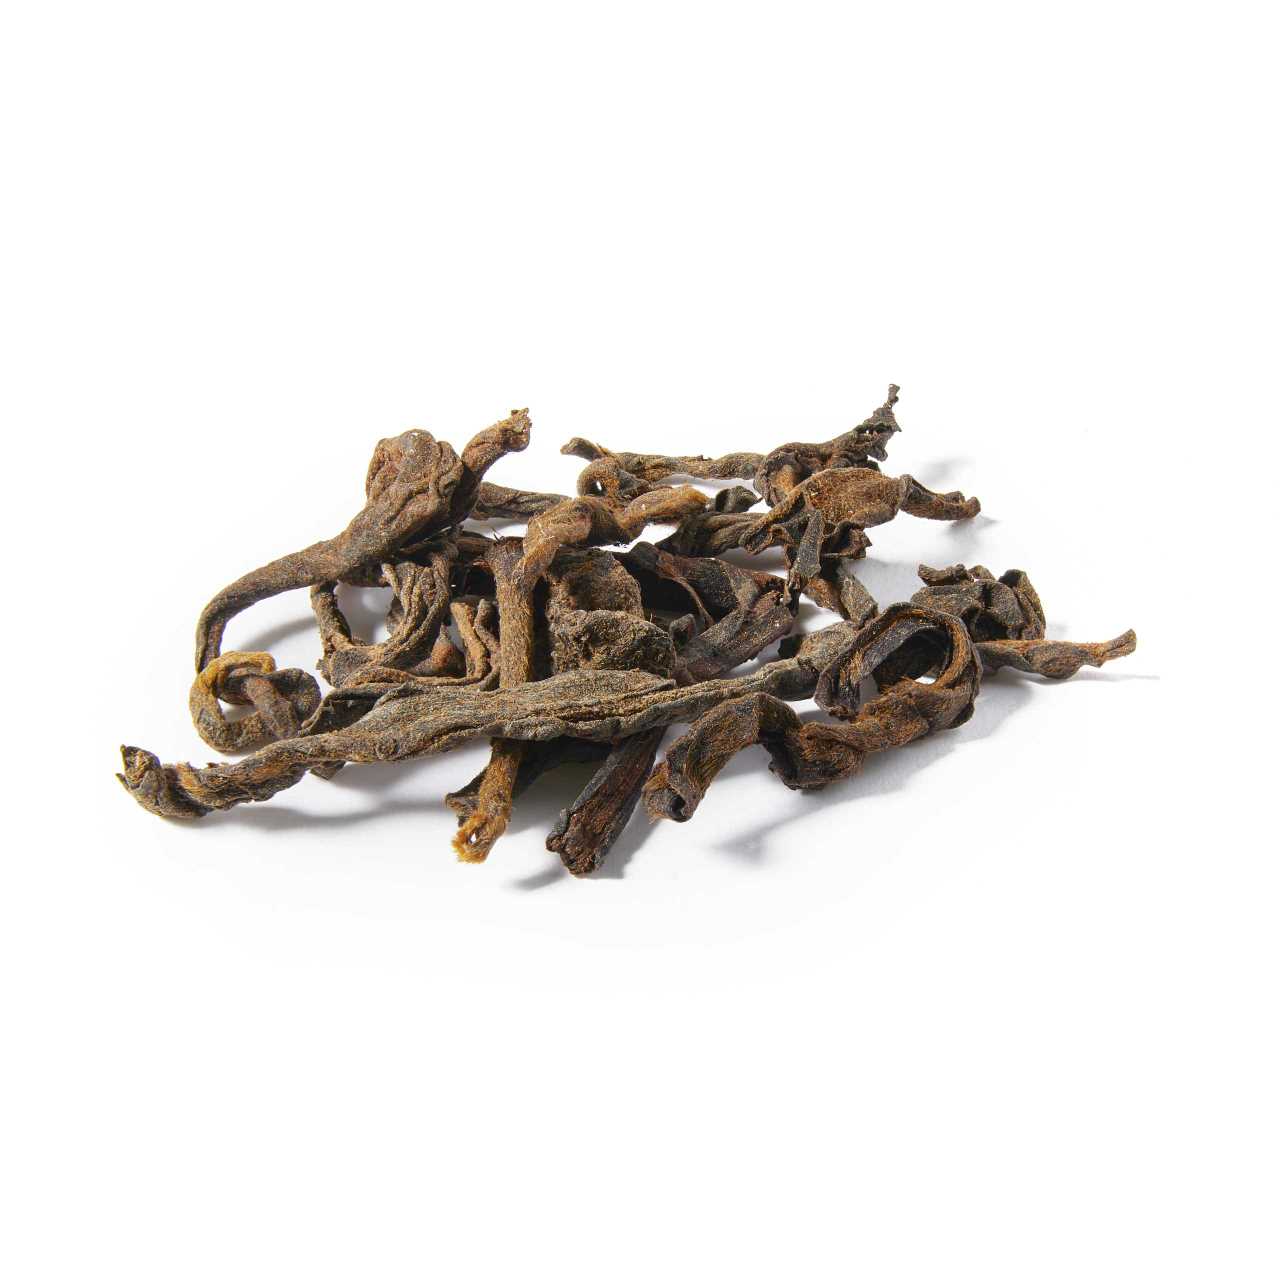 A macro pile of Lincang Ripe Pu-Erh Loose Leaf tea